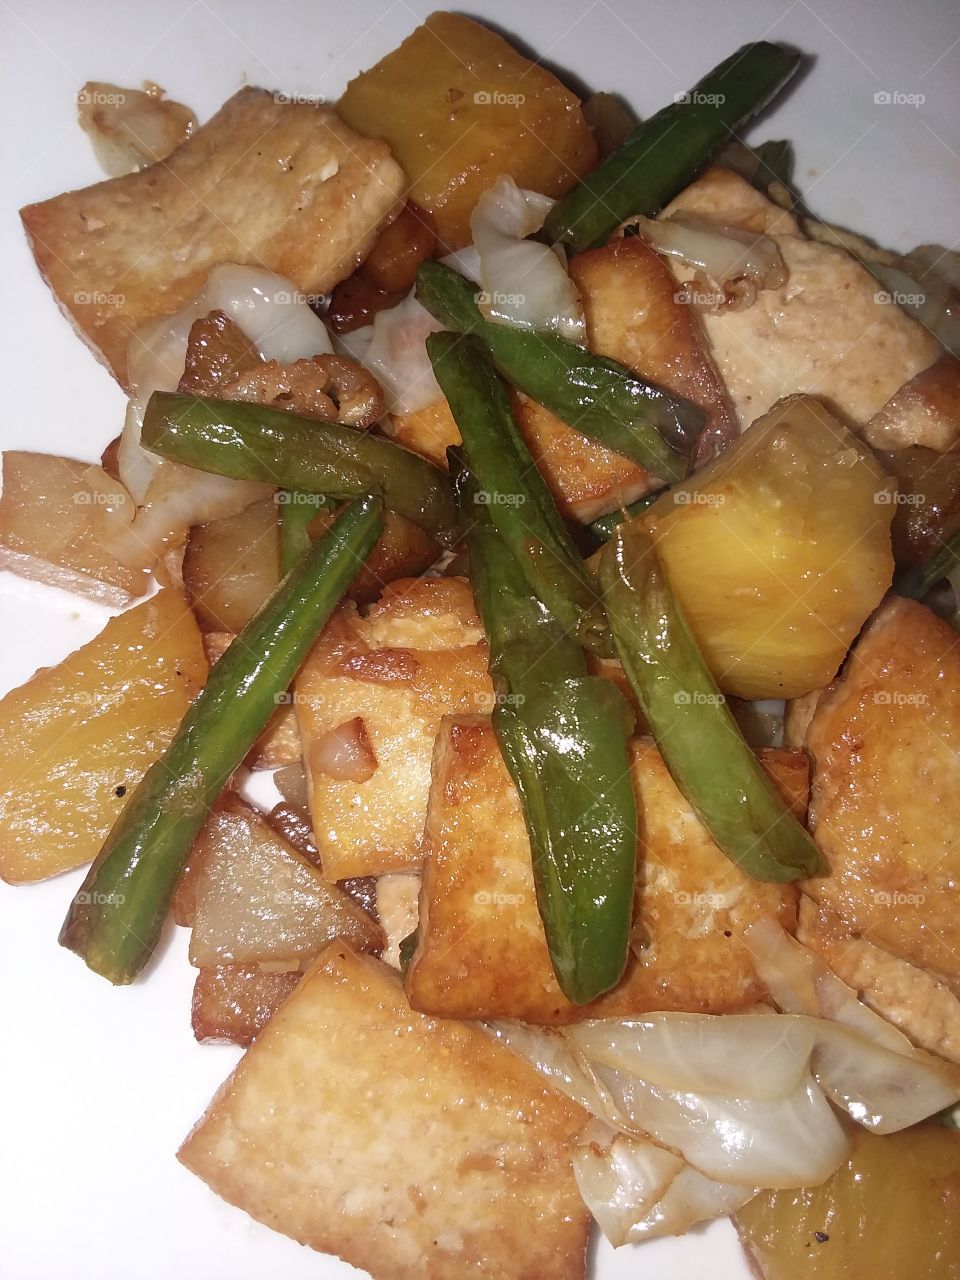 Fried tofu with pineapple and veggies